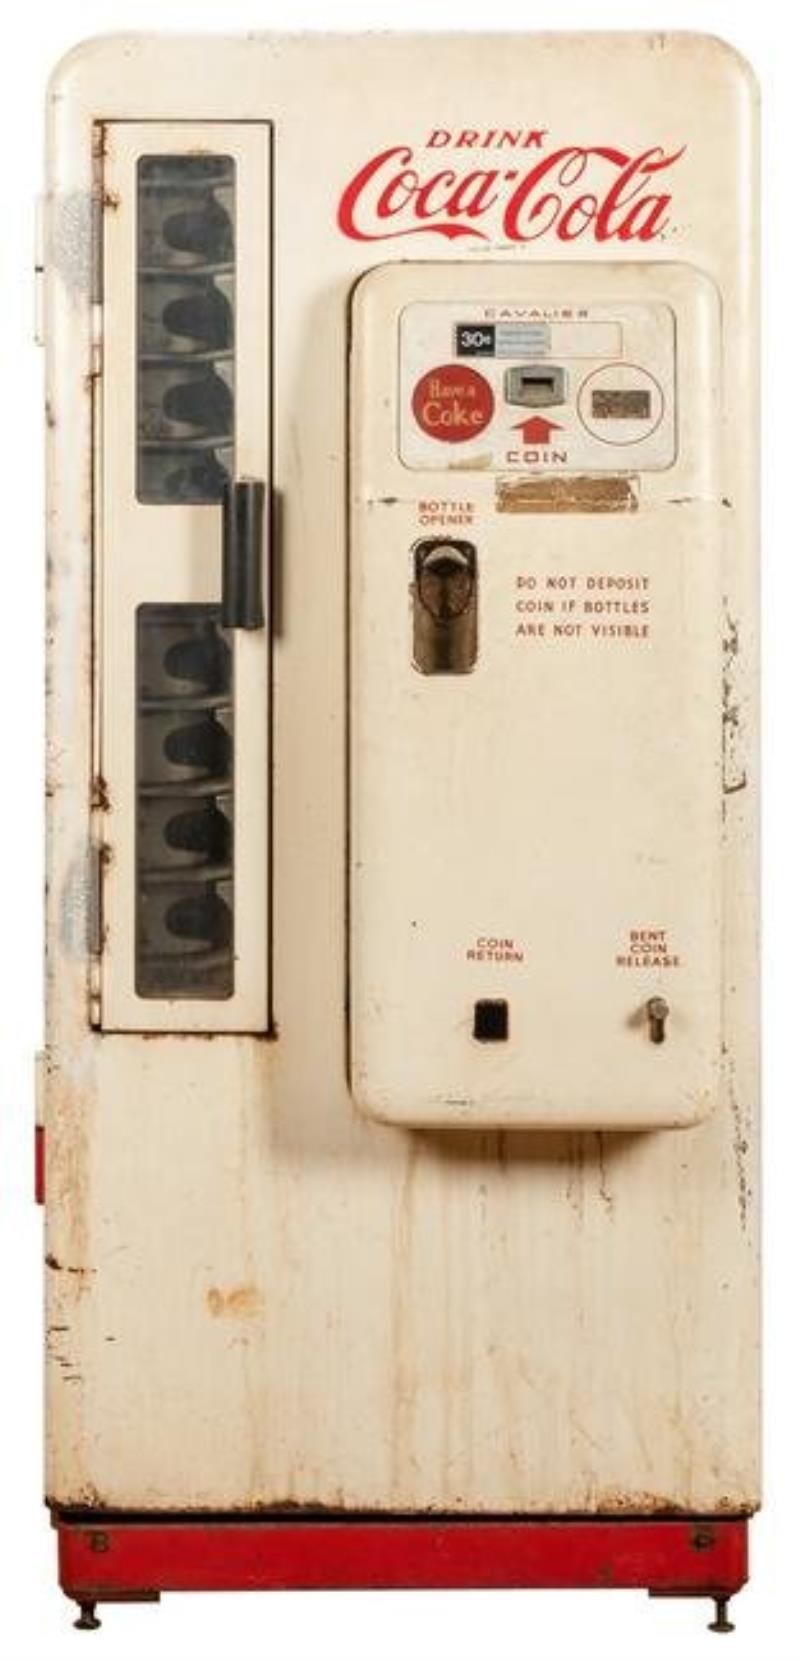 Cavalier 72 Coca-Cola Vending Machine. Vintage machine